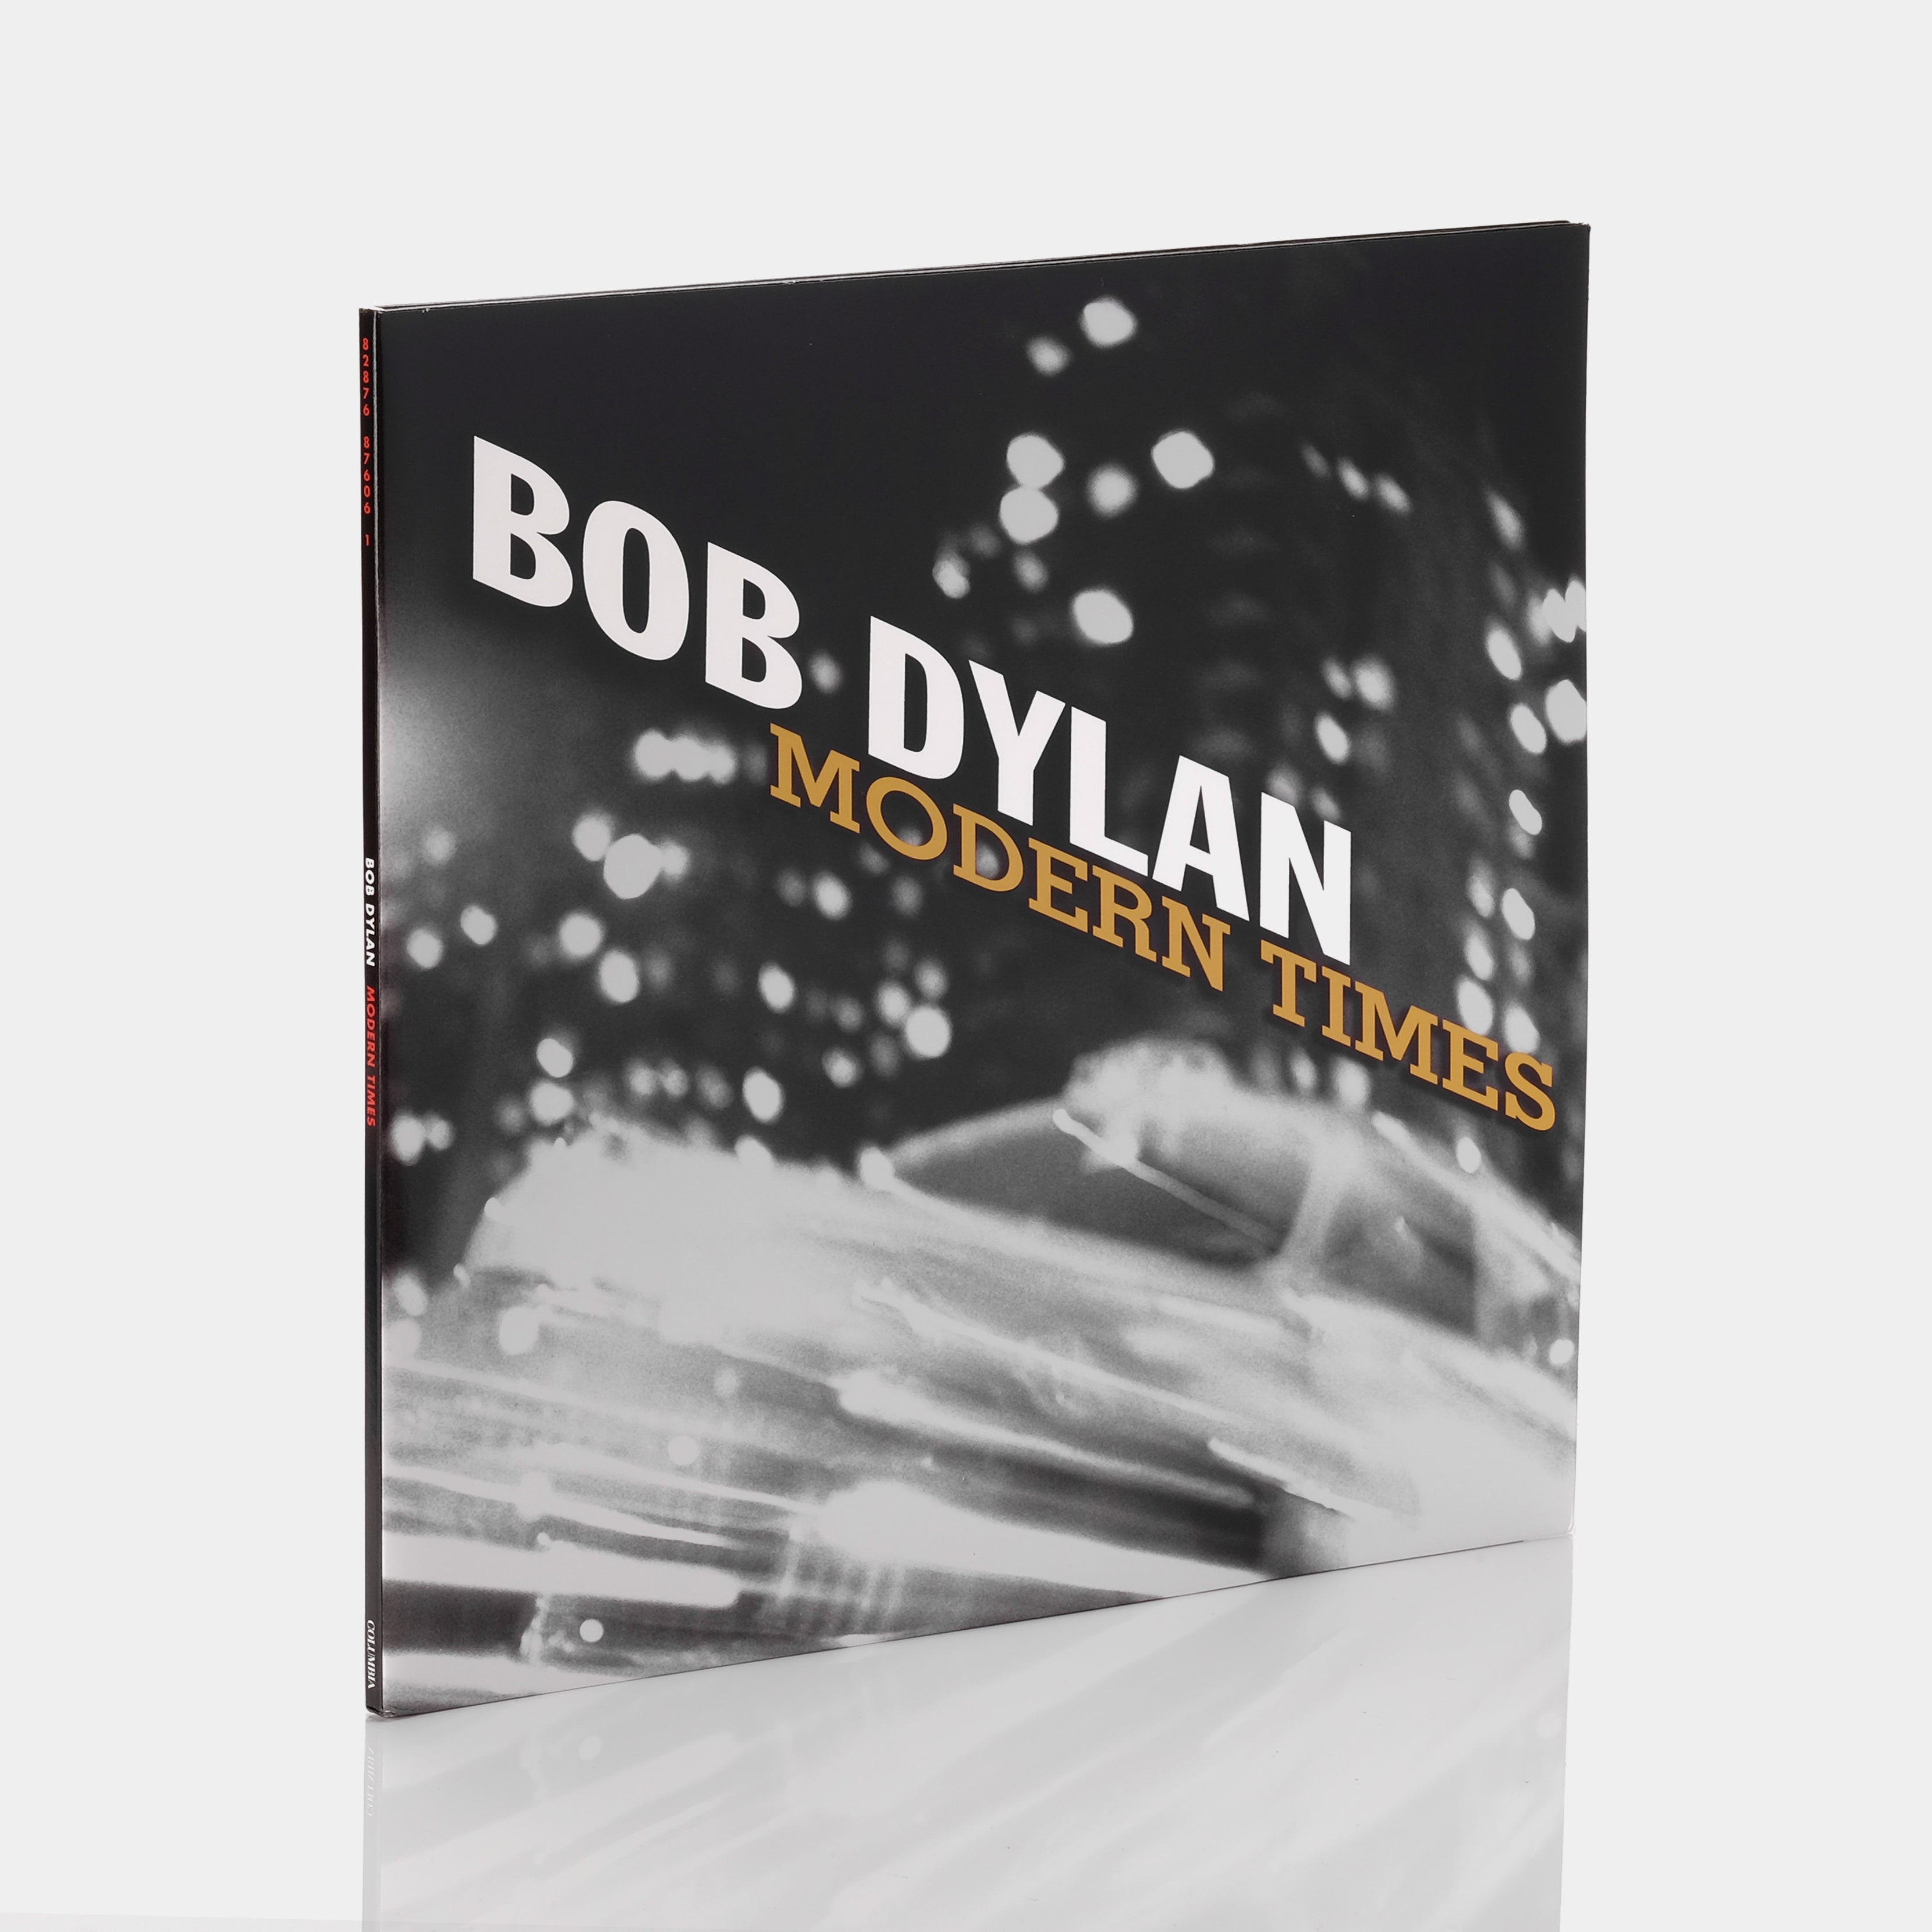 Bob Dylan - Modern Times 2xLP Vinyl Record